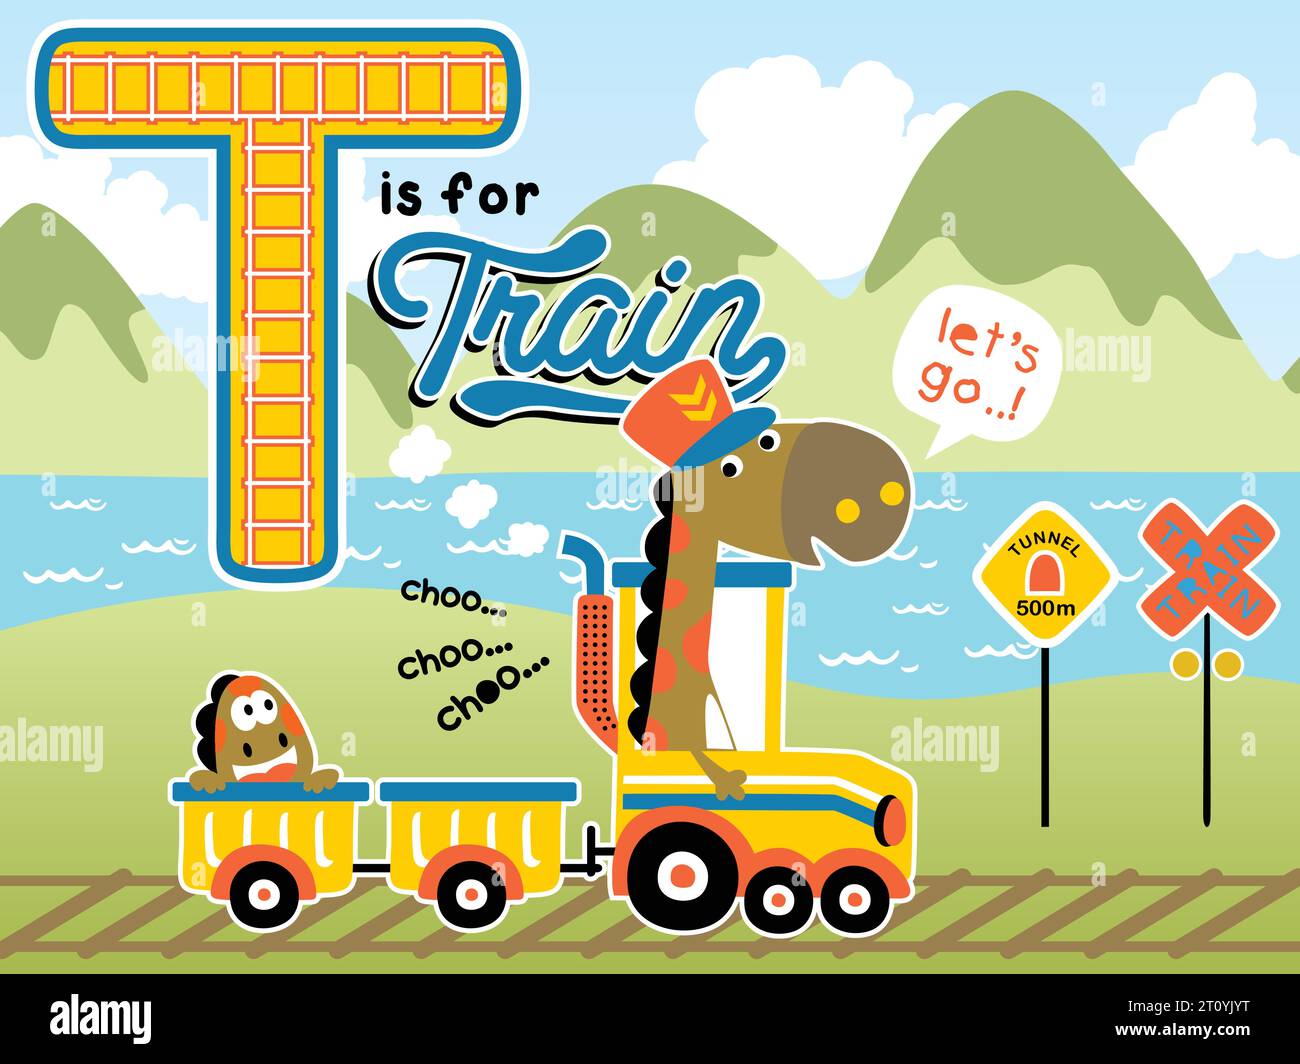 Vector cartoon of dinosaurs on steam train, railway elements on landscape background Stock Vector